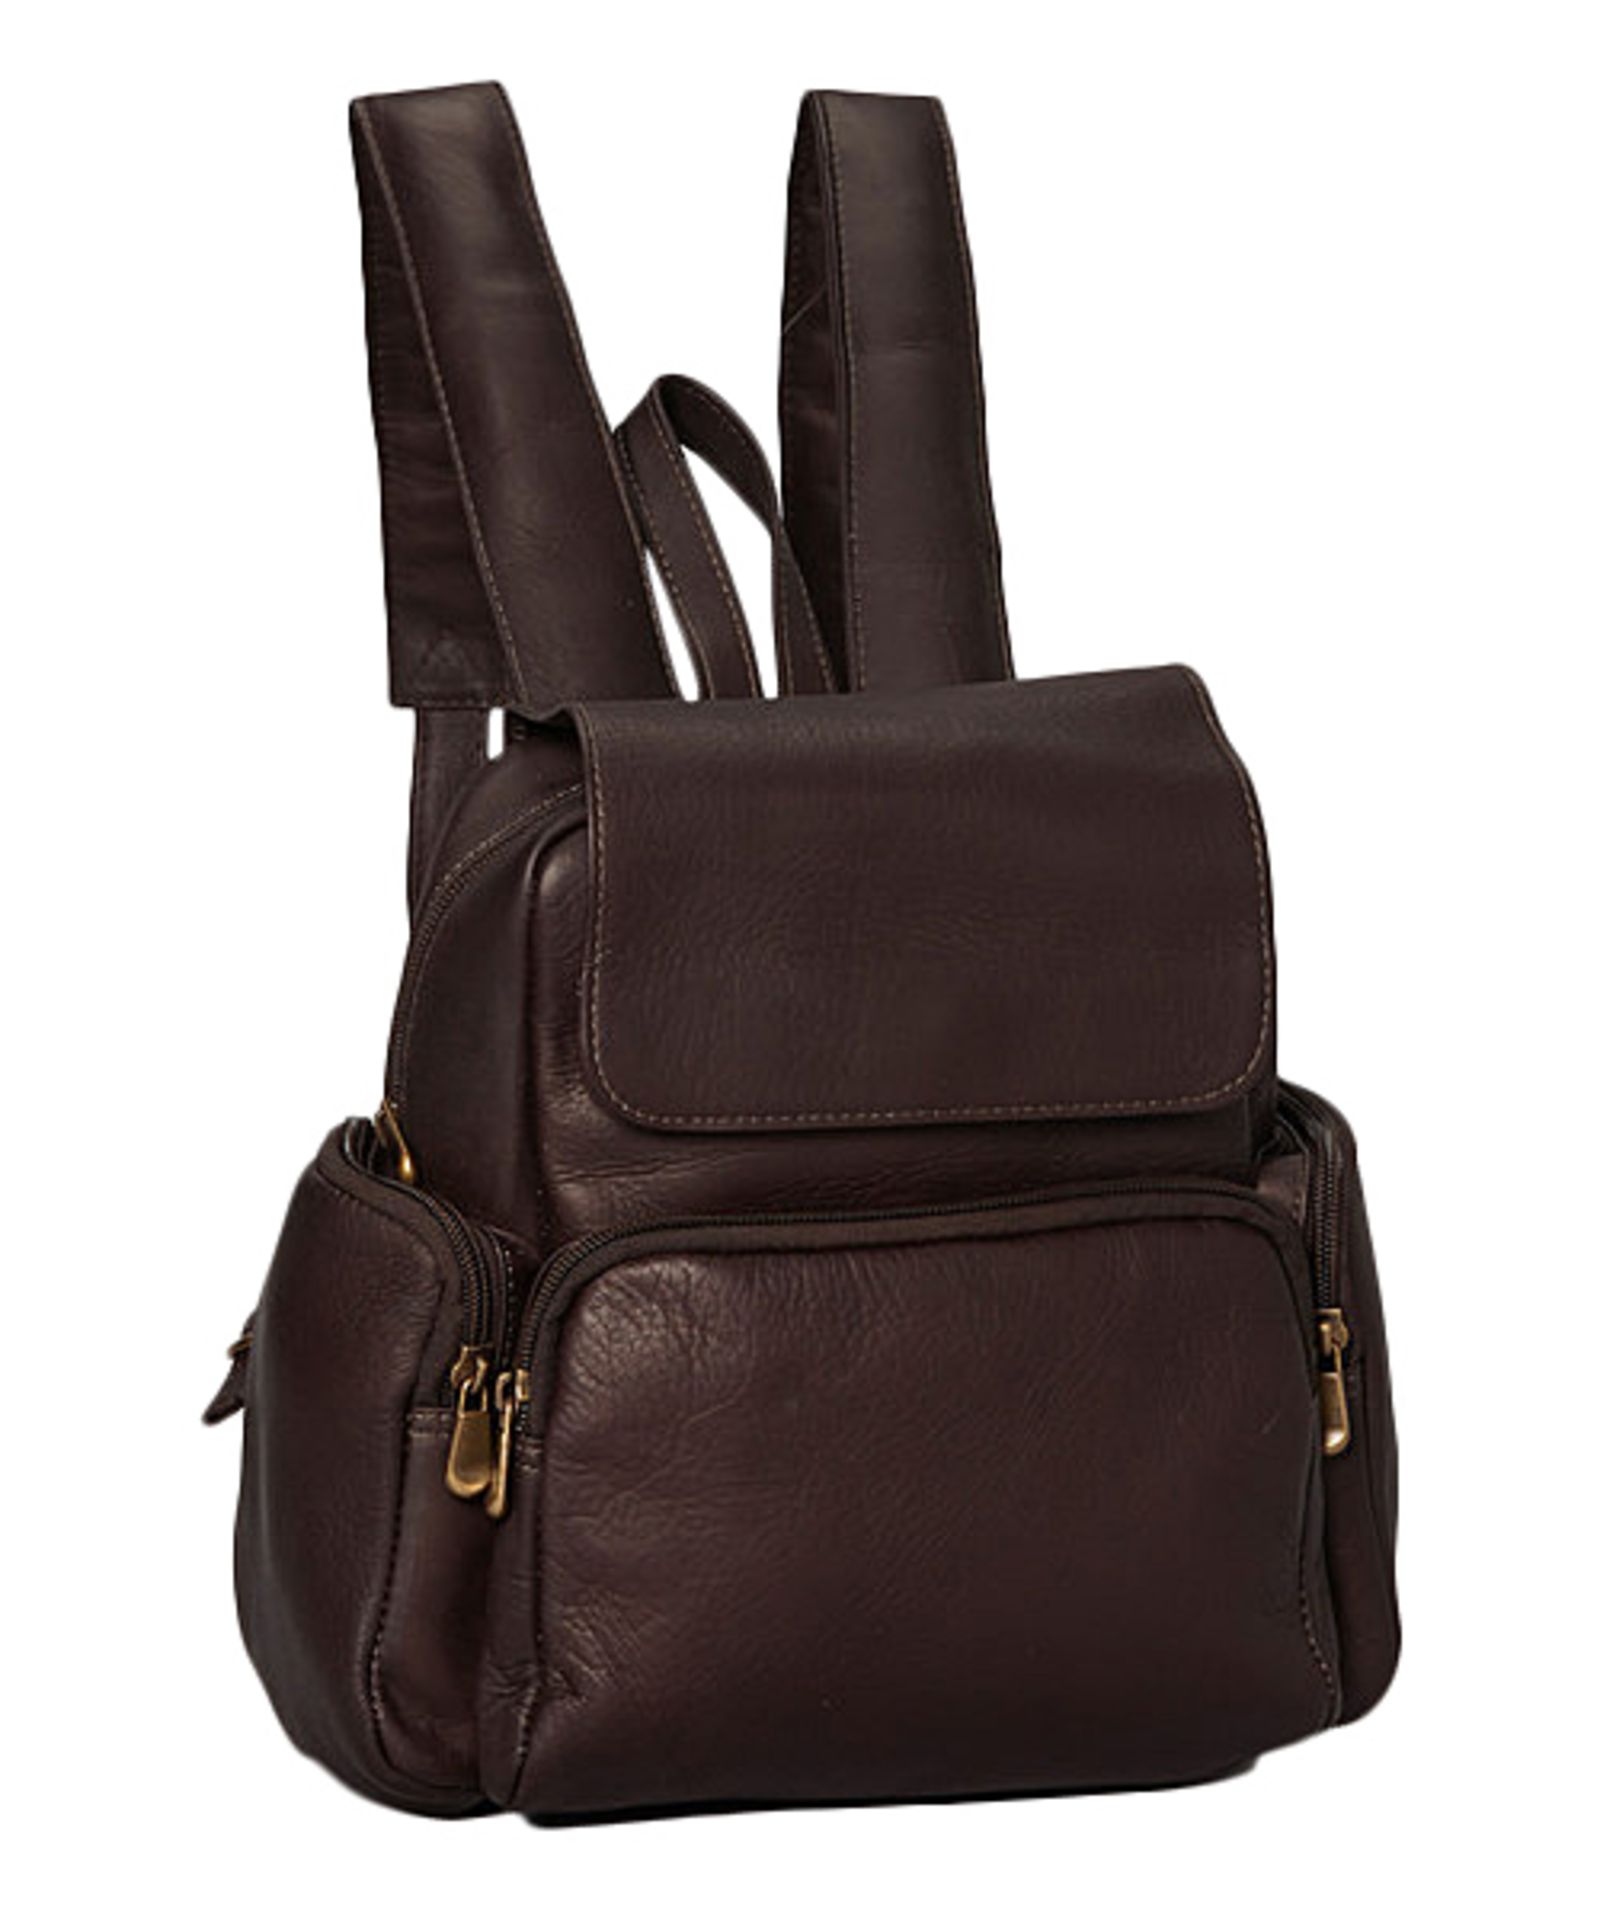 Le Donne Café Multi-Pocket Leather Backpack - One Size